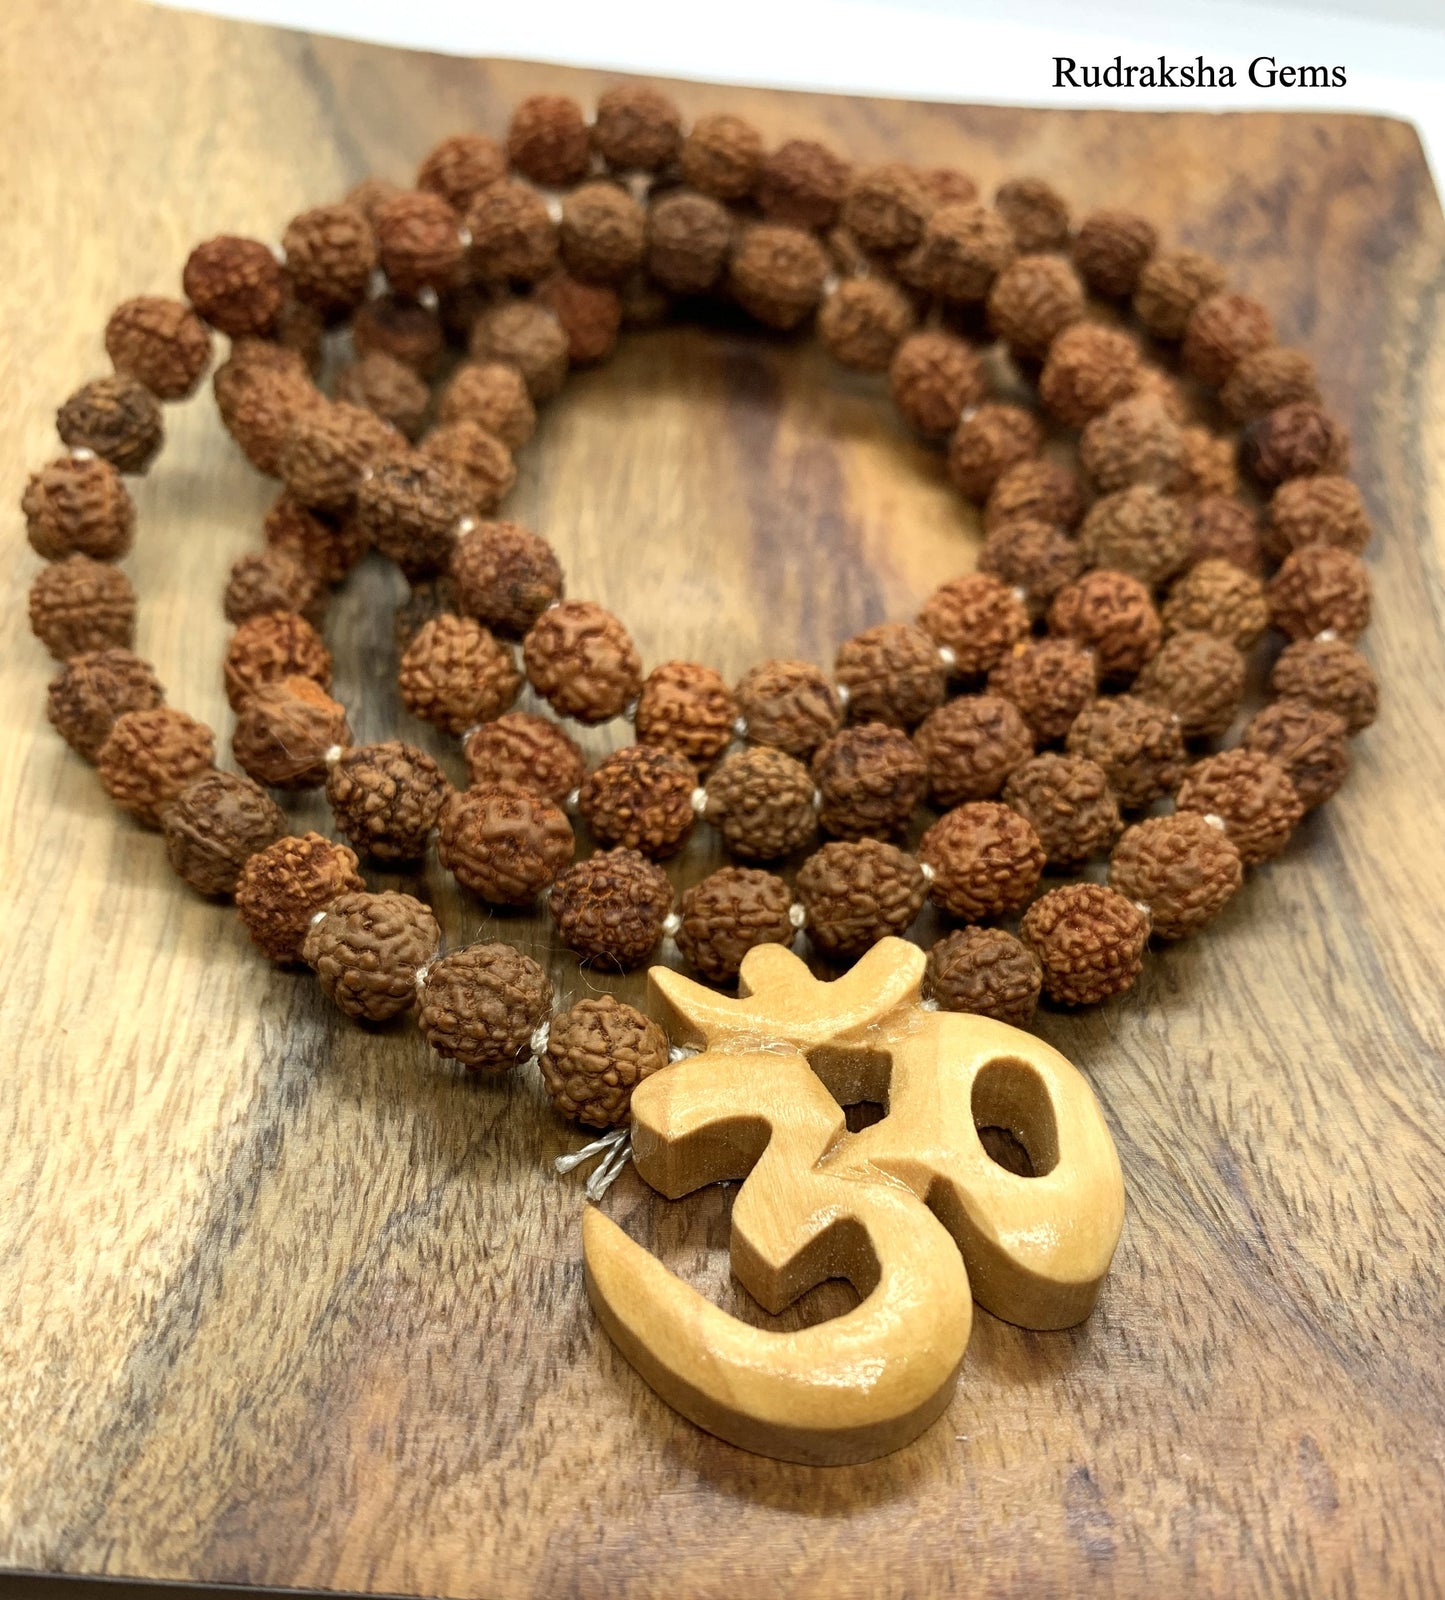 Om Rudraksha Necklace,108 beads,8mm Natural Rudraksha Seed Beads,Om Aum Pendant Necklace, Rudraksha Necklace, Unisex,Prayer,Mala,Meditation